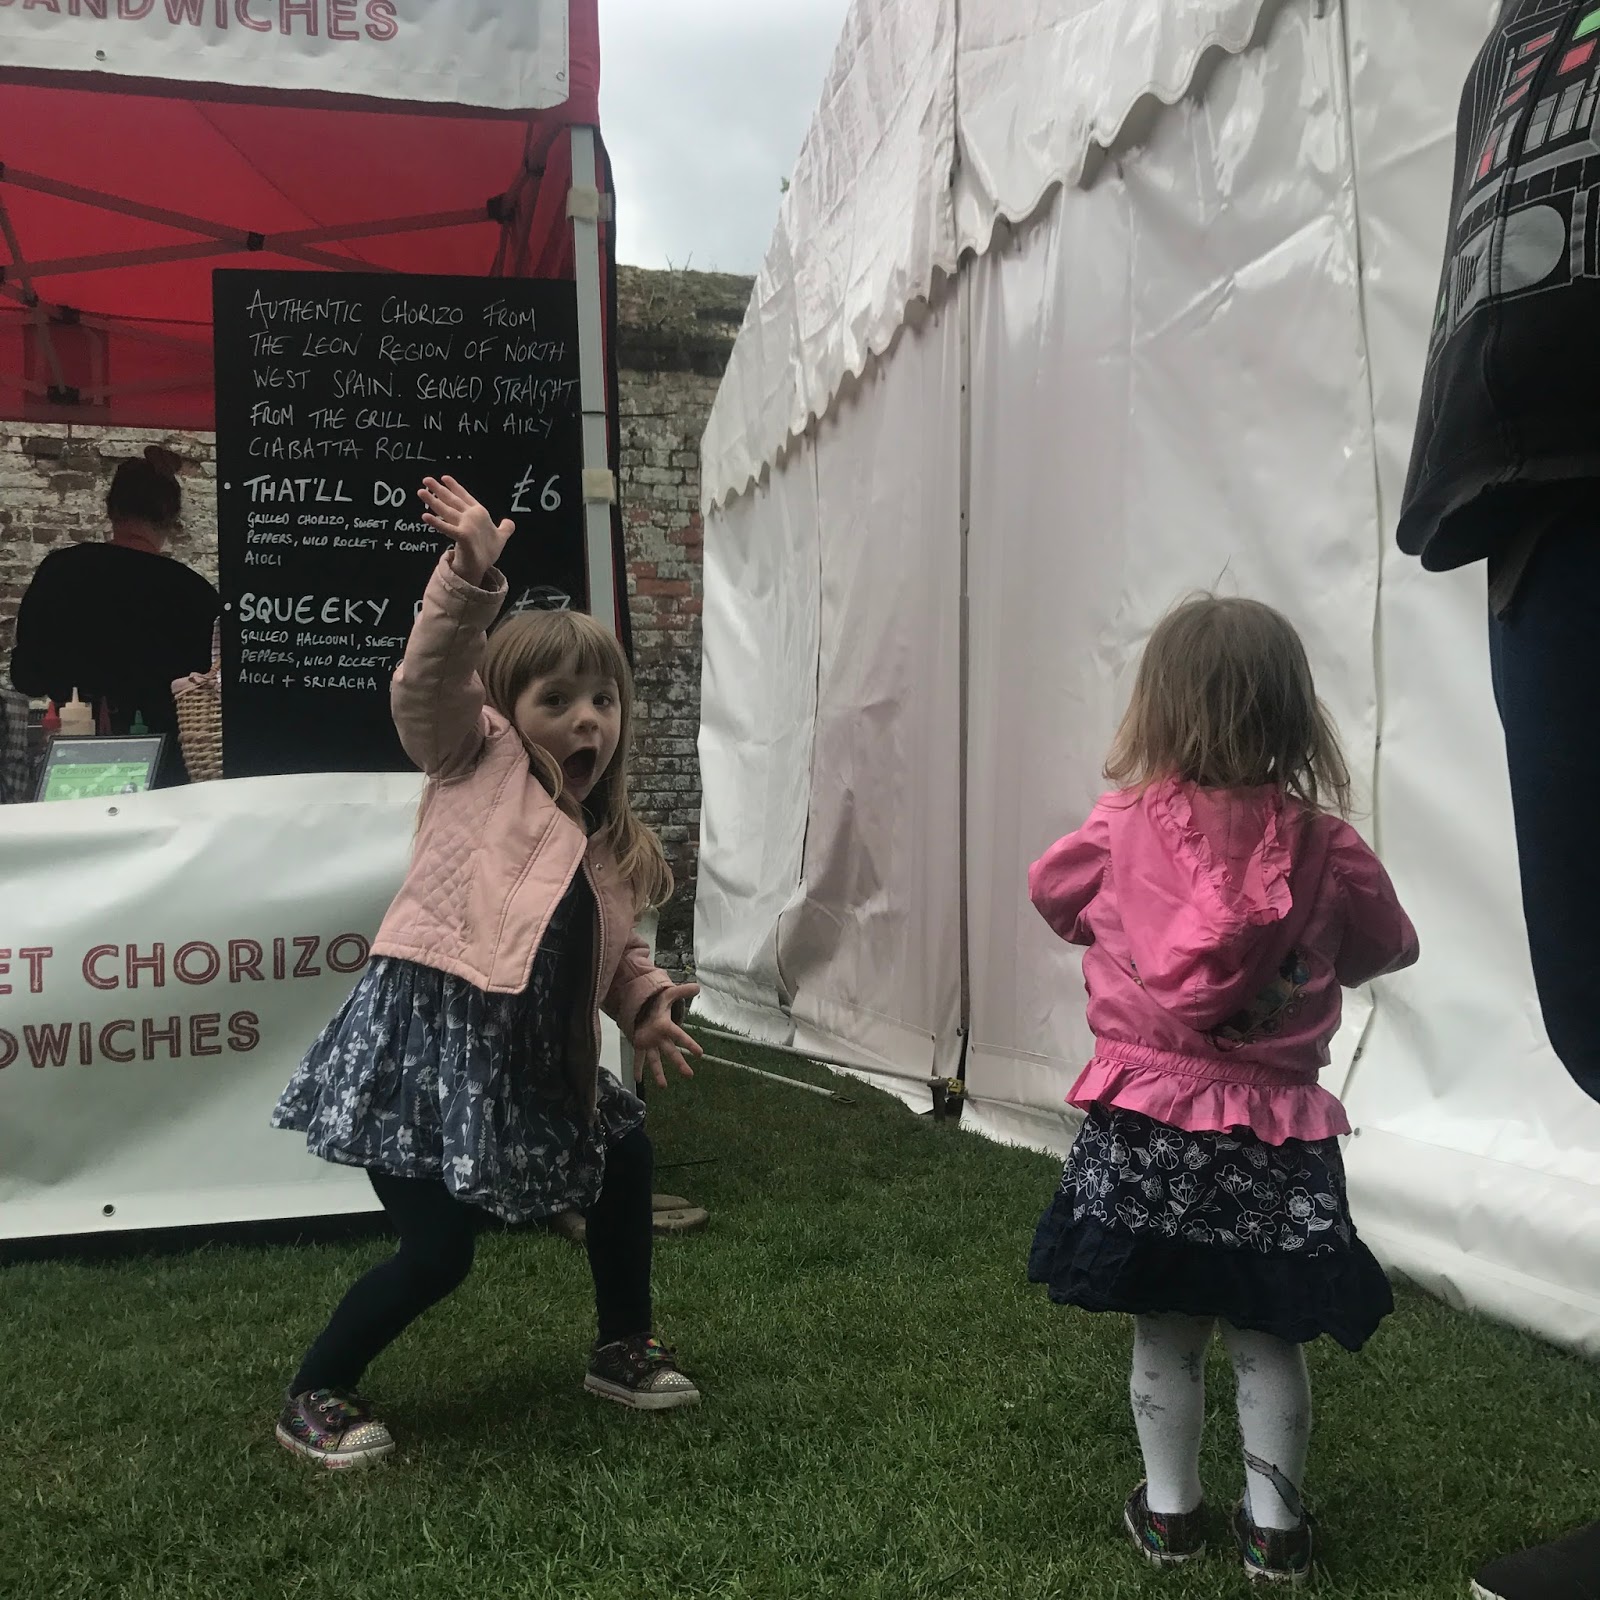 Dancing at Ely Food Festival 2017